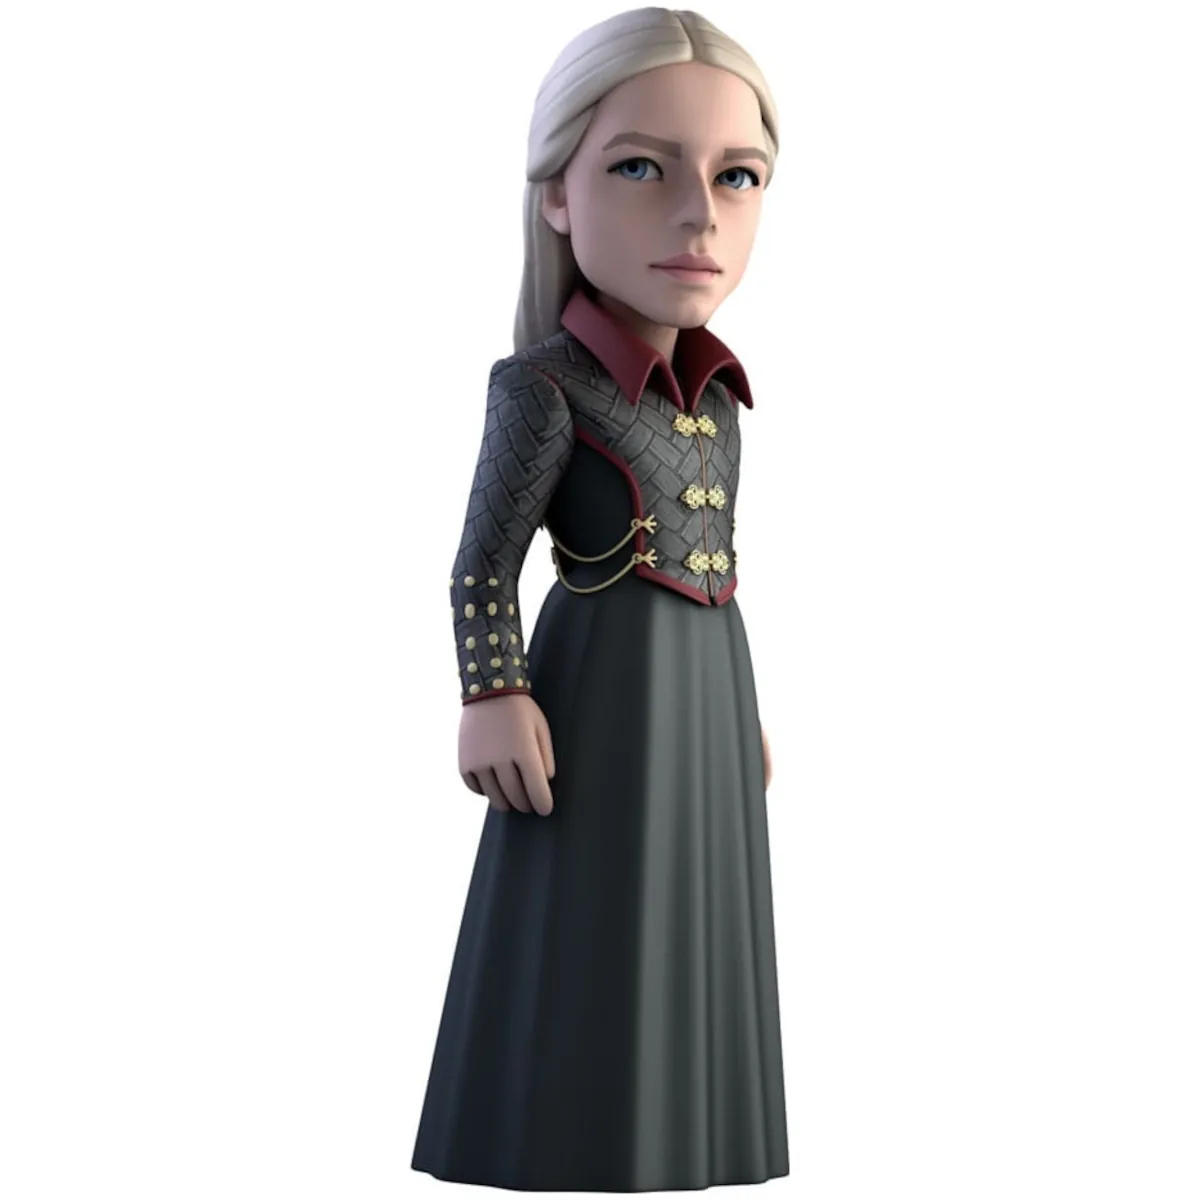 MN16204 Princess Rhaenyra Targaryen (House of the Dragon) 12cm MINIX Collectable Figure